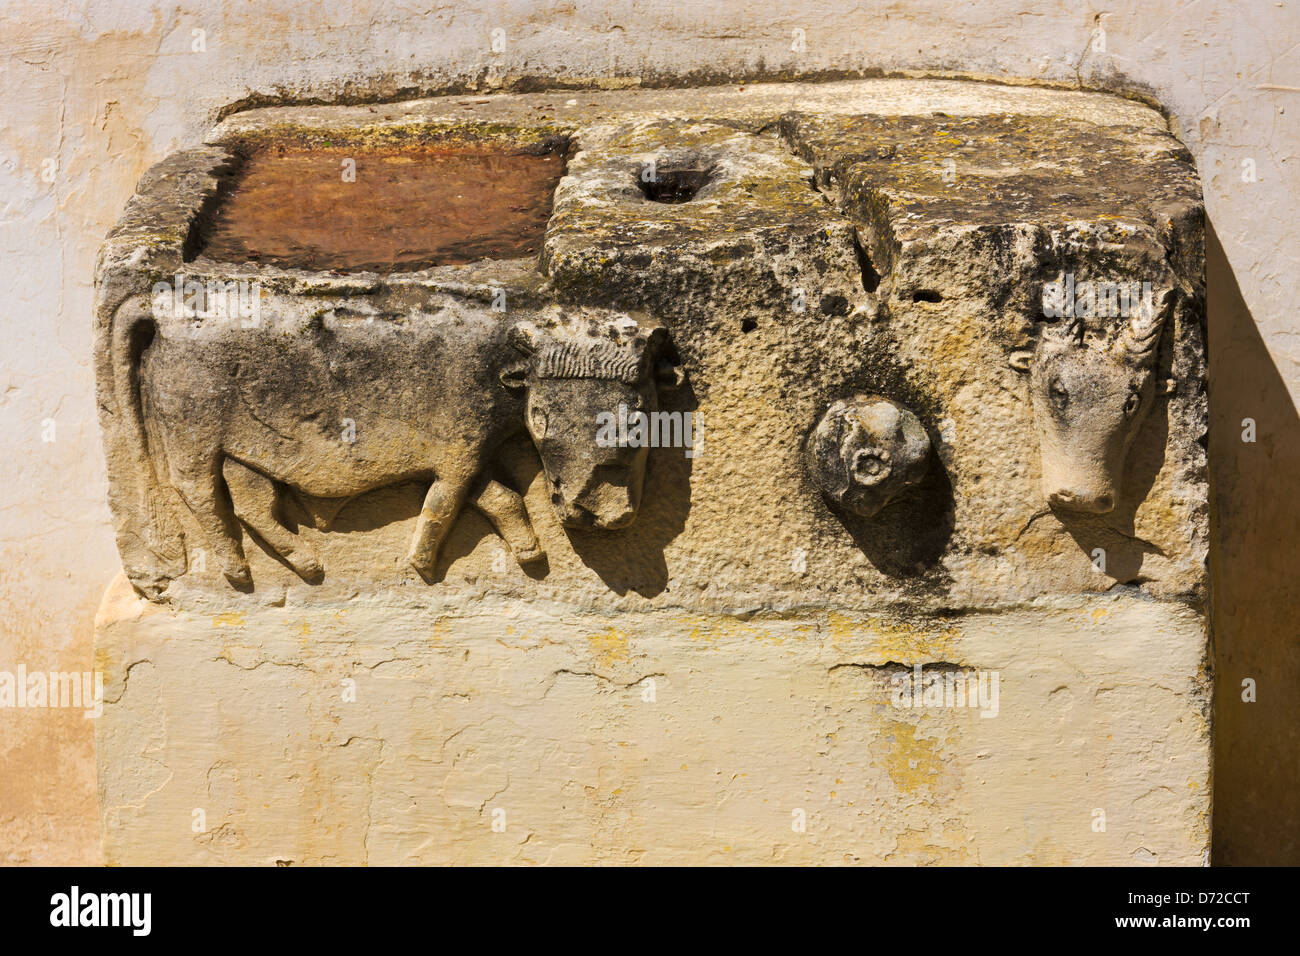 Statua di rovine romane, Makthar, Tunisia Foto Stock